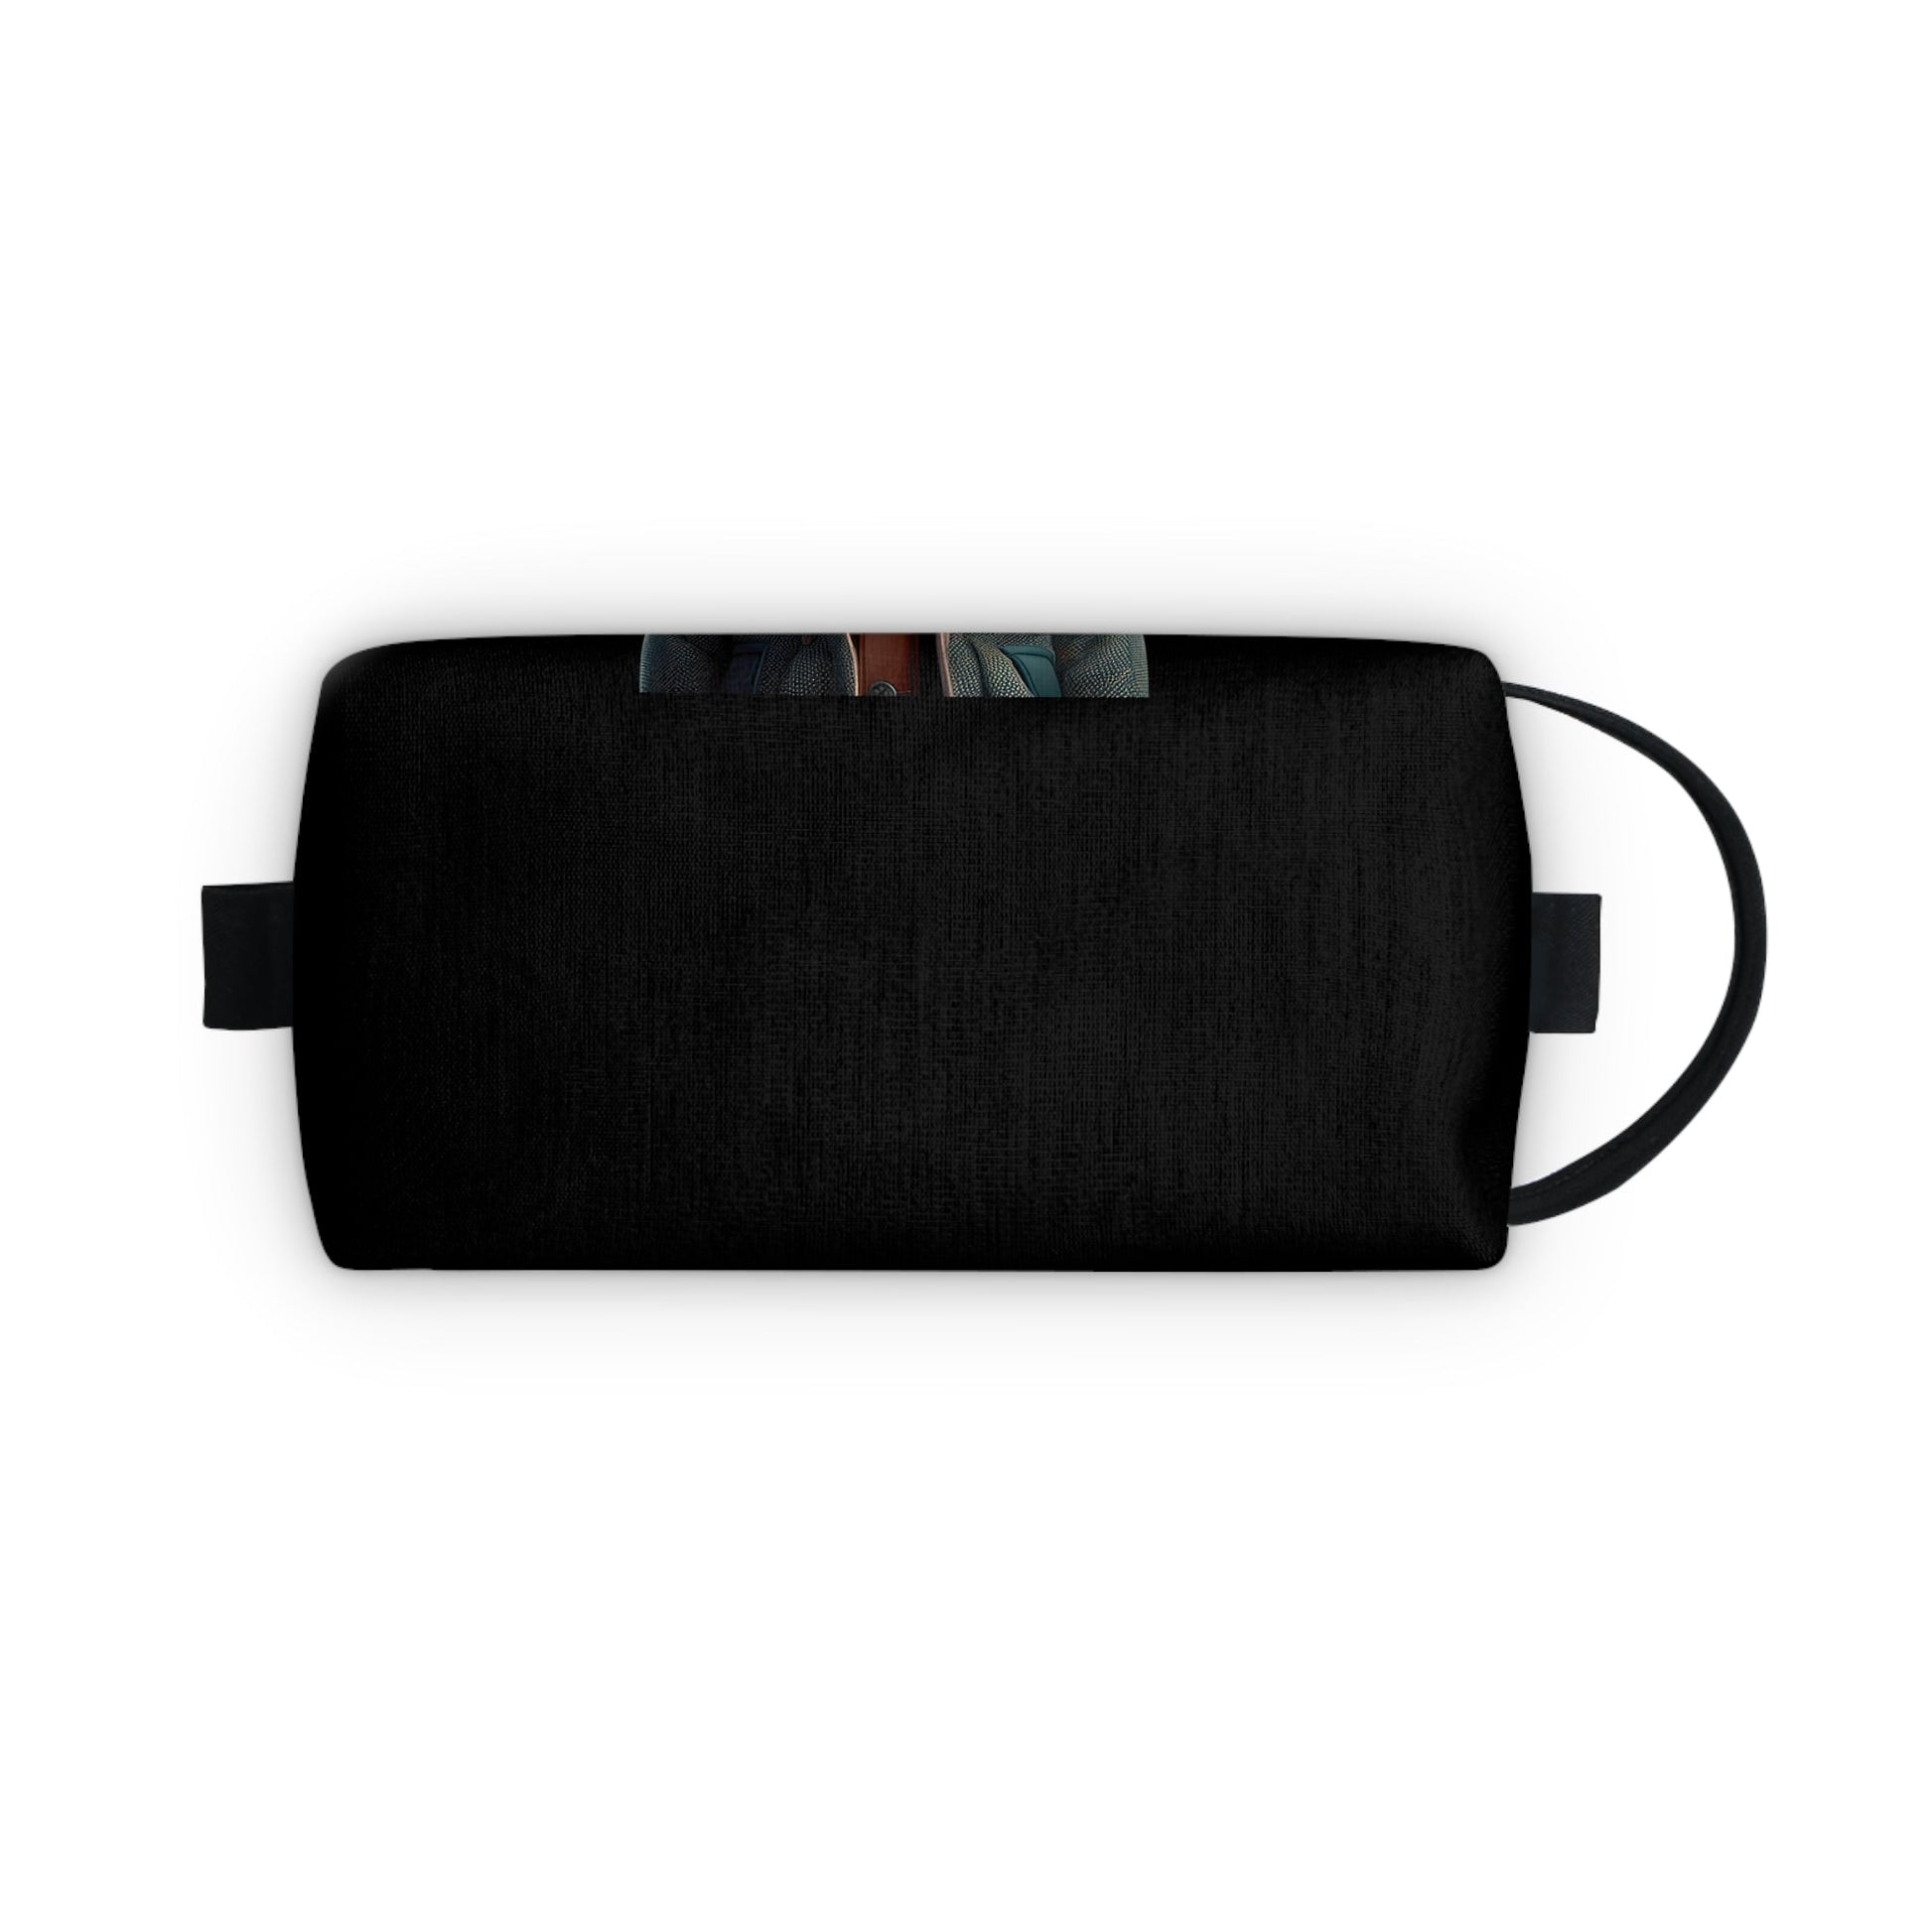 BUFORD Stylish Toiletry Bag | Fashionable Travel Bag